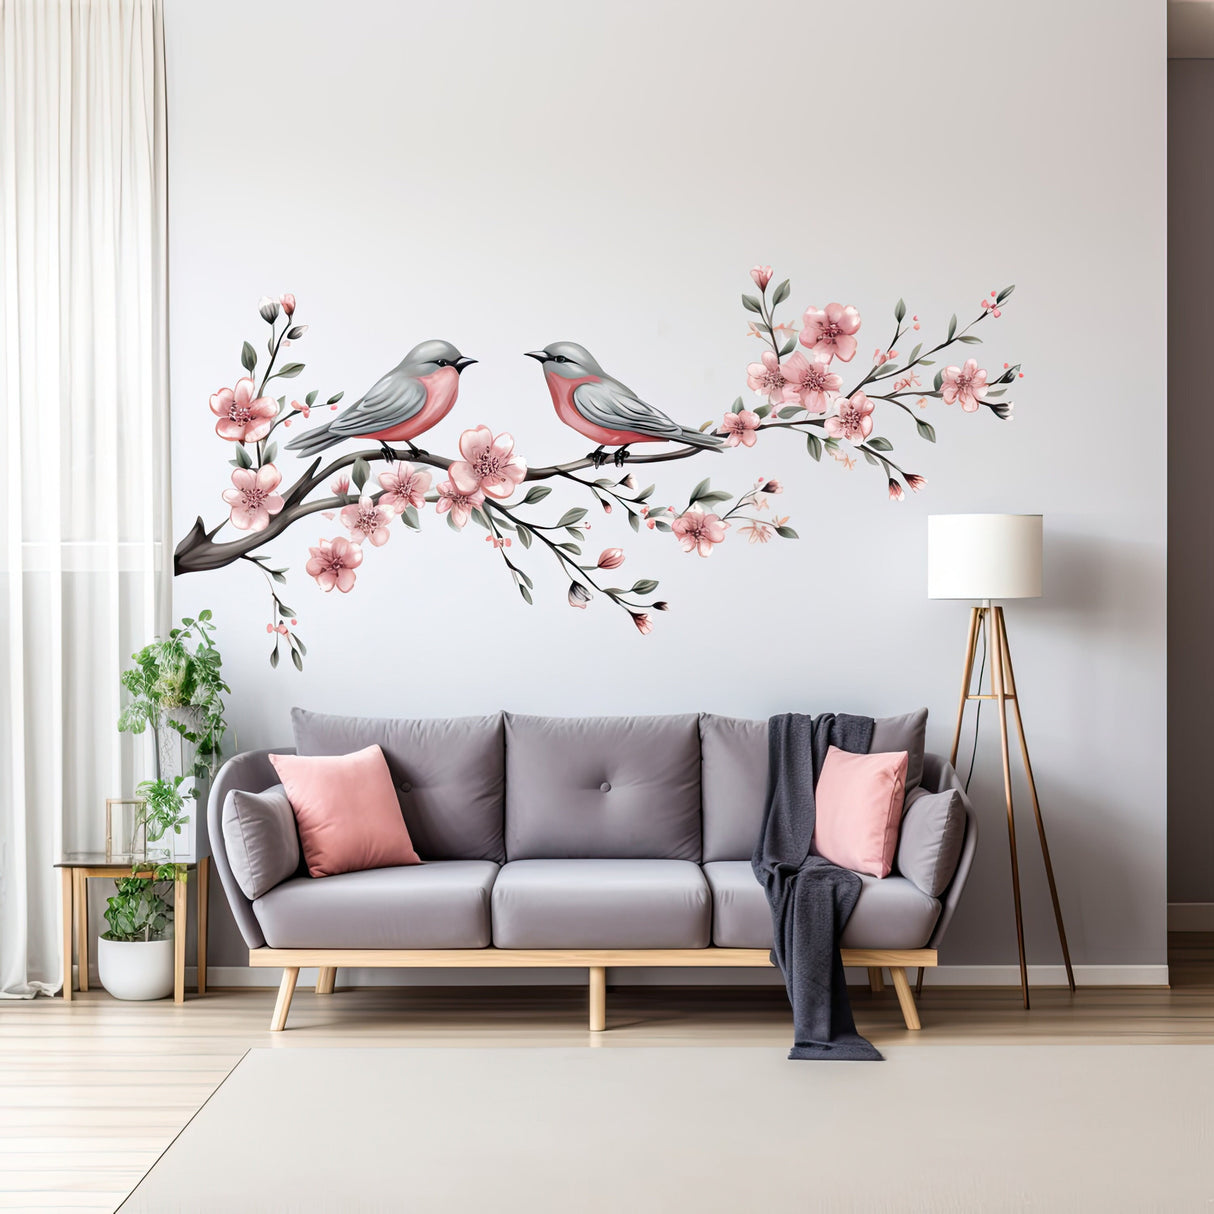 Elegant Tree Branch with Birds Wall Decal - Vinyl Corner Sticker for Living Room